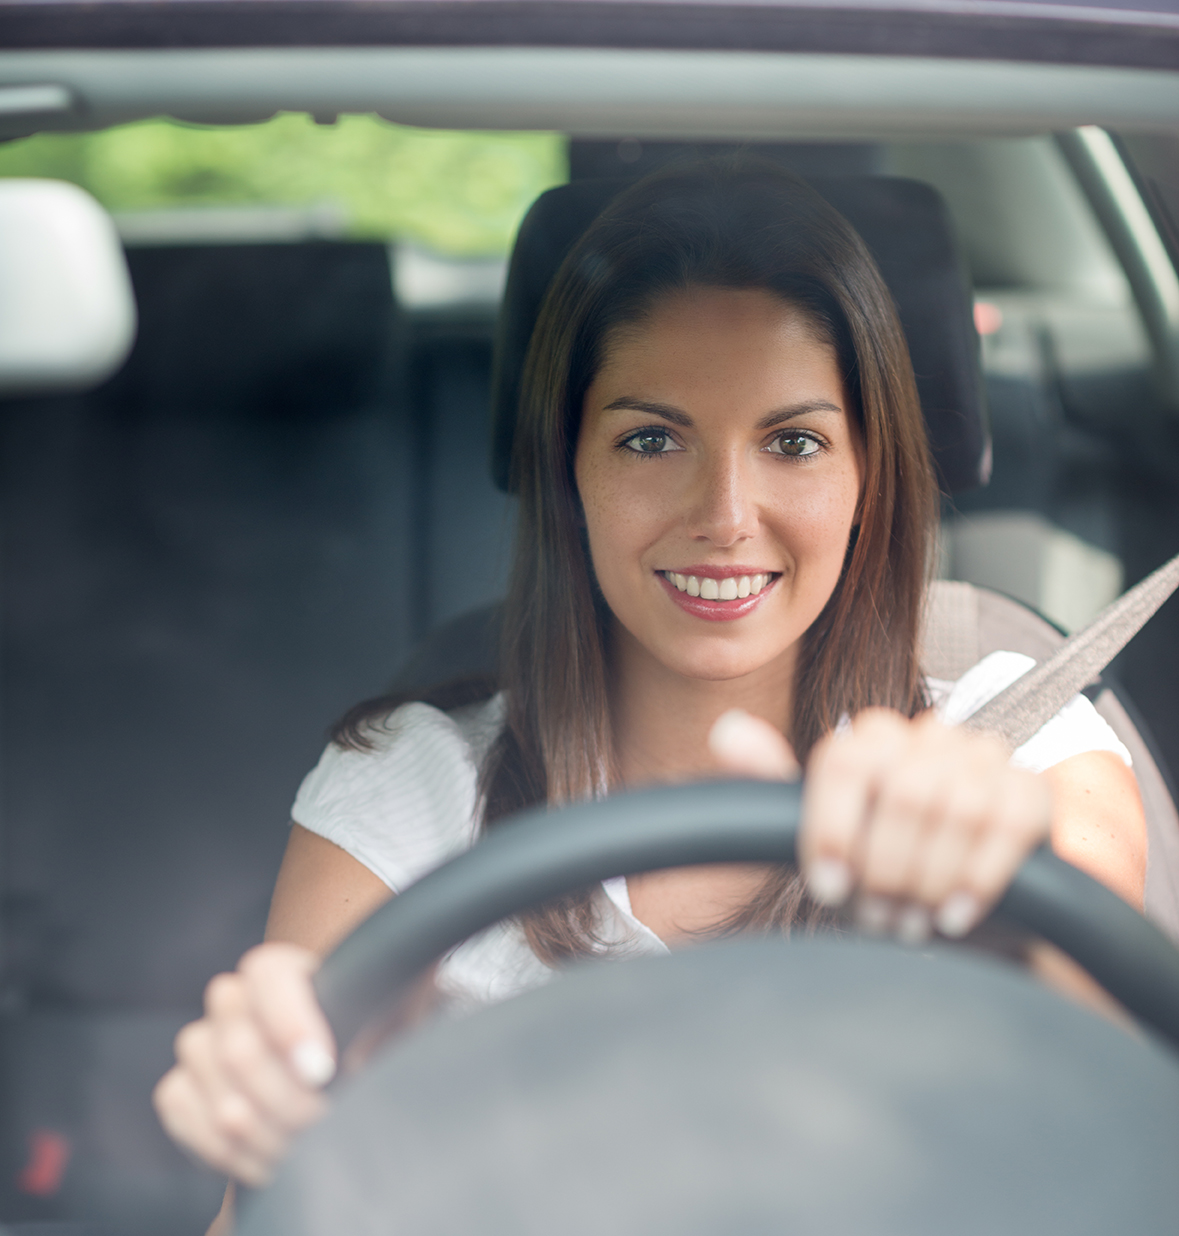 Woman driving wearing a seat belt.